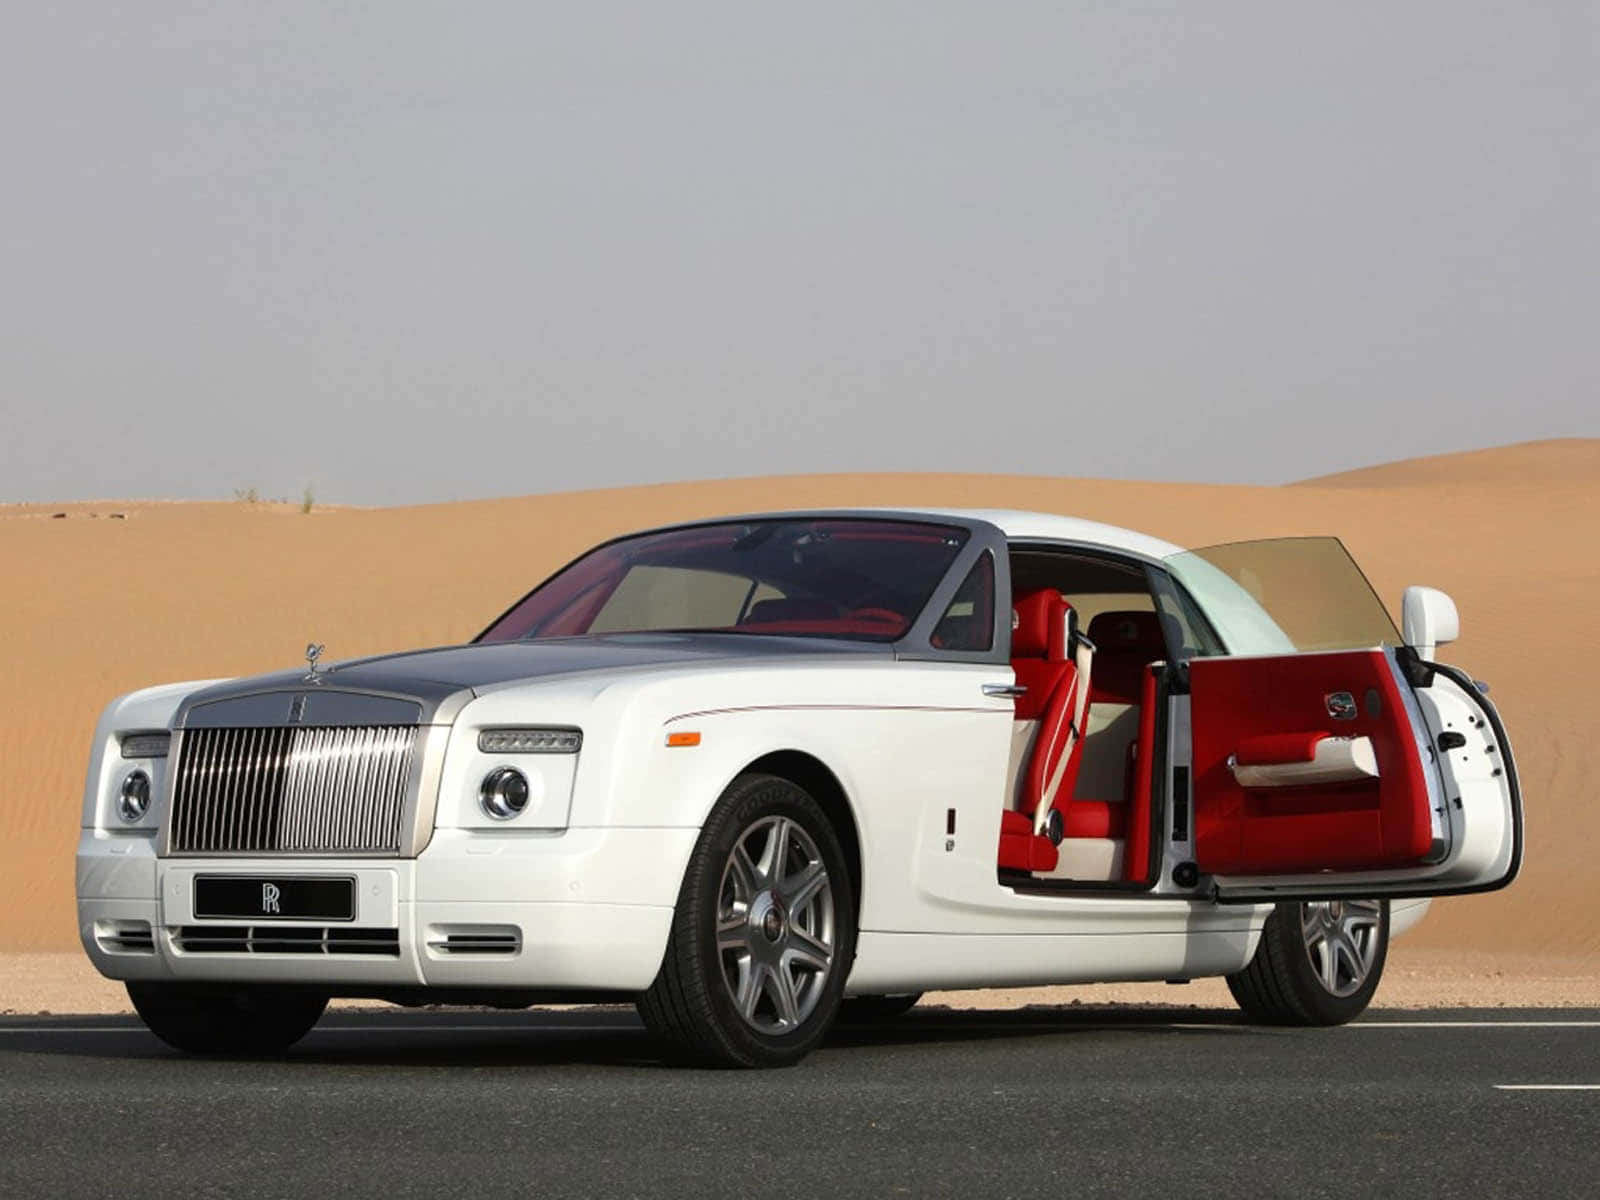 Caption: "finest Luxury - Rolls Royce Phantom" Wallpaper